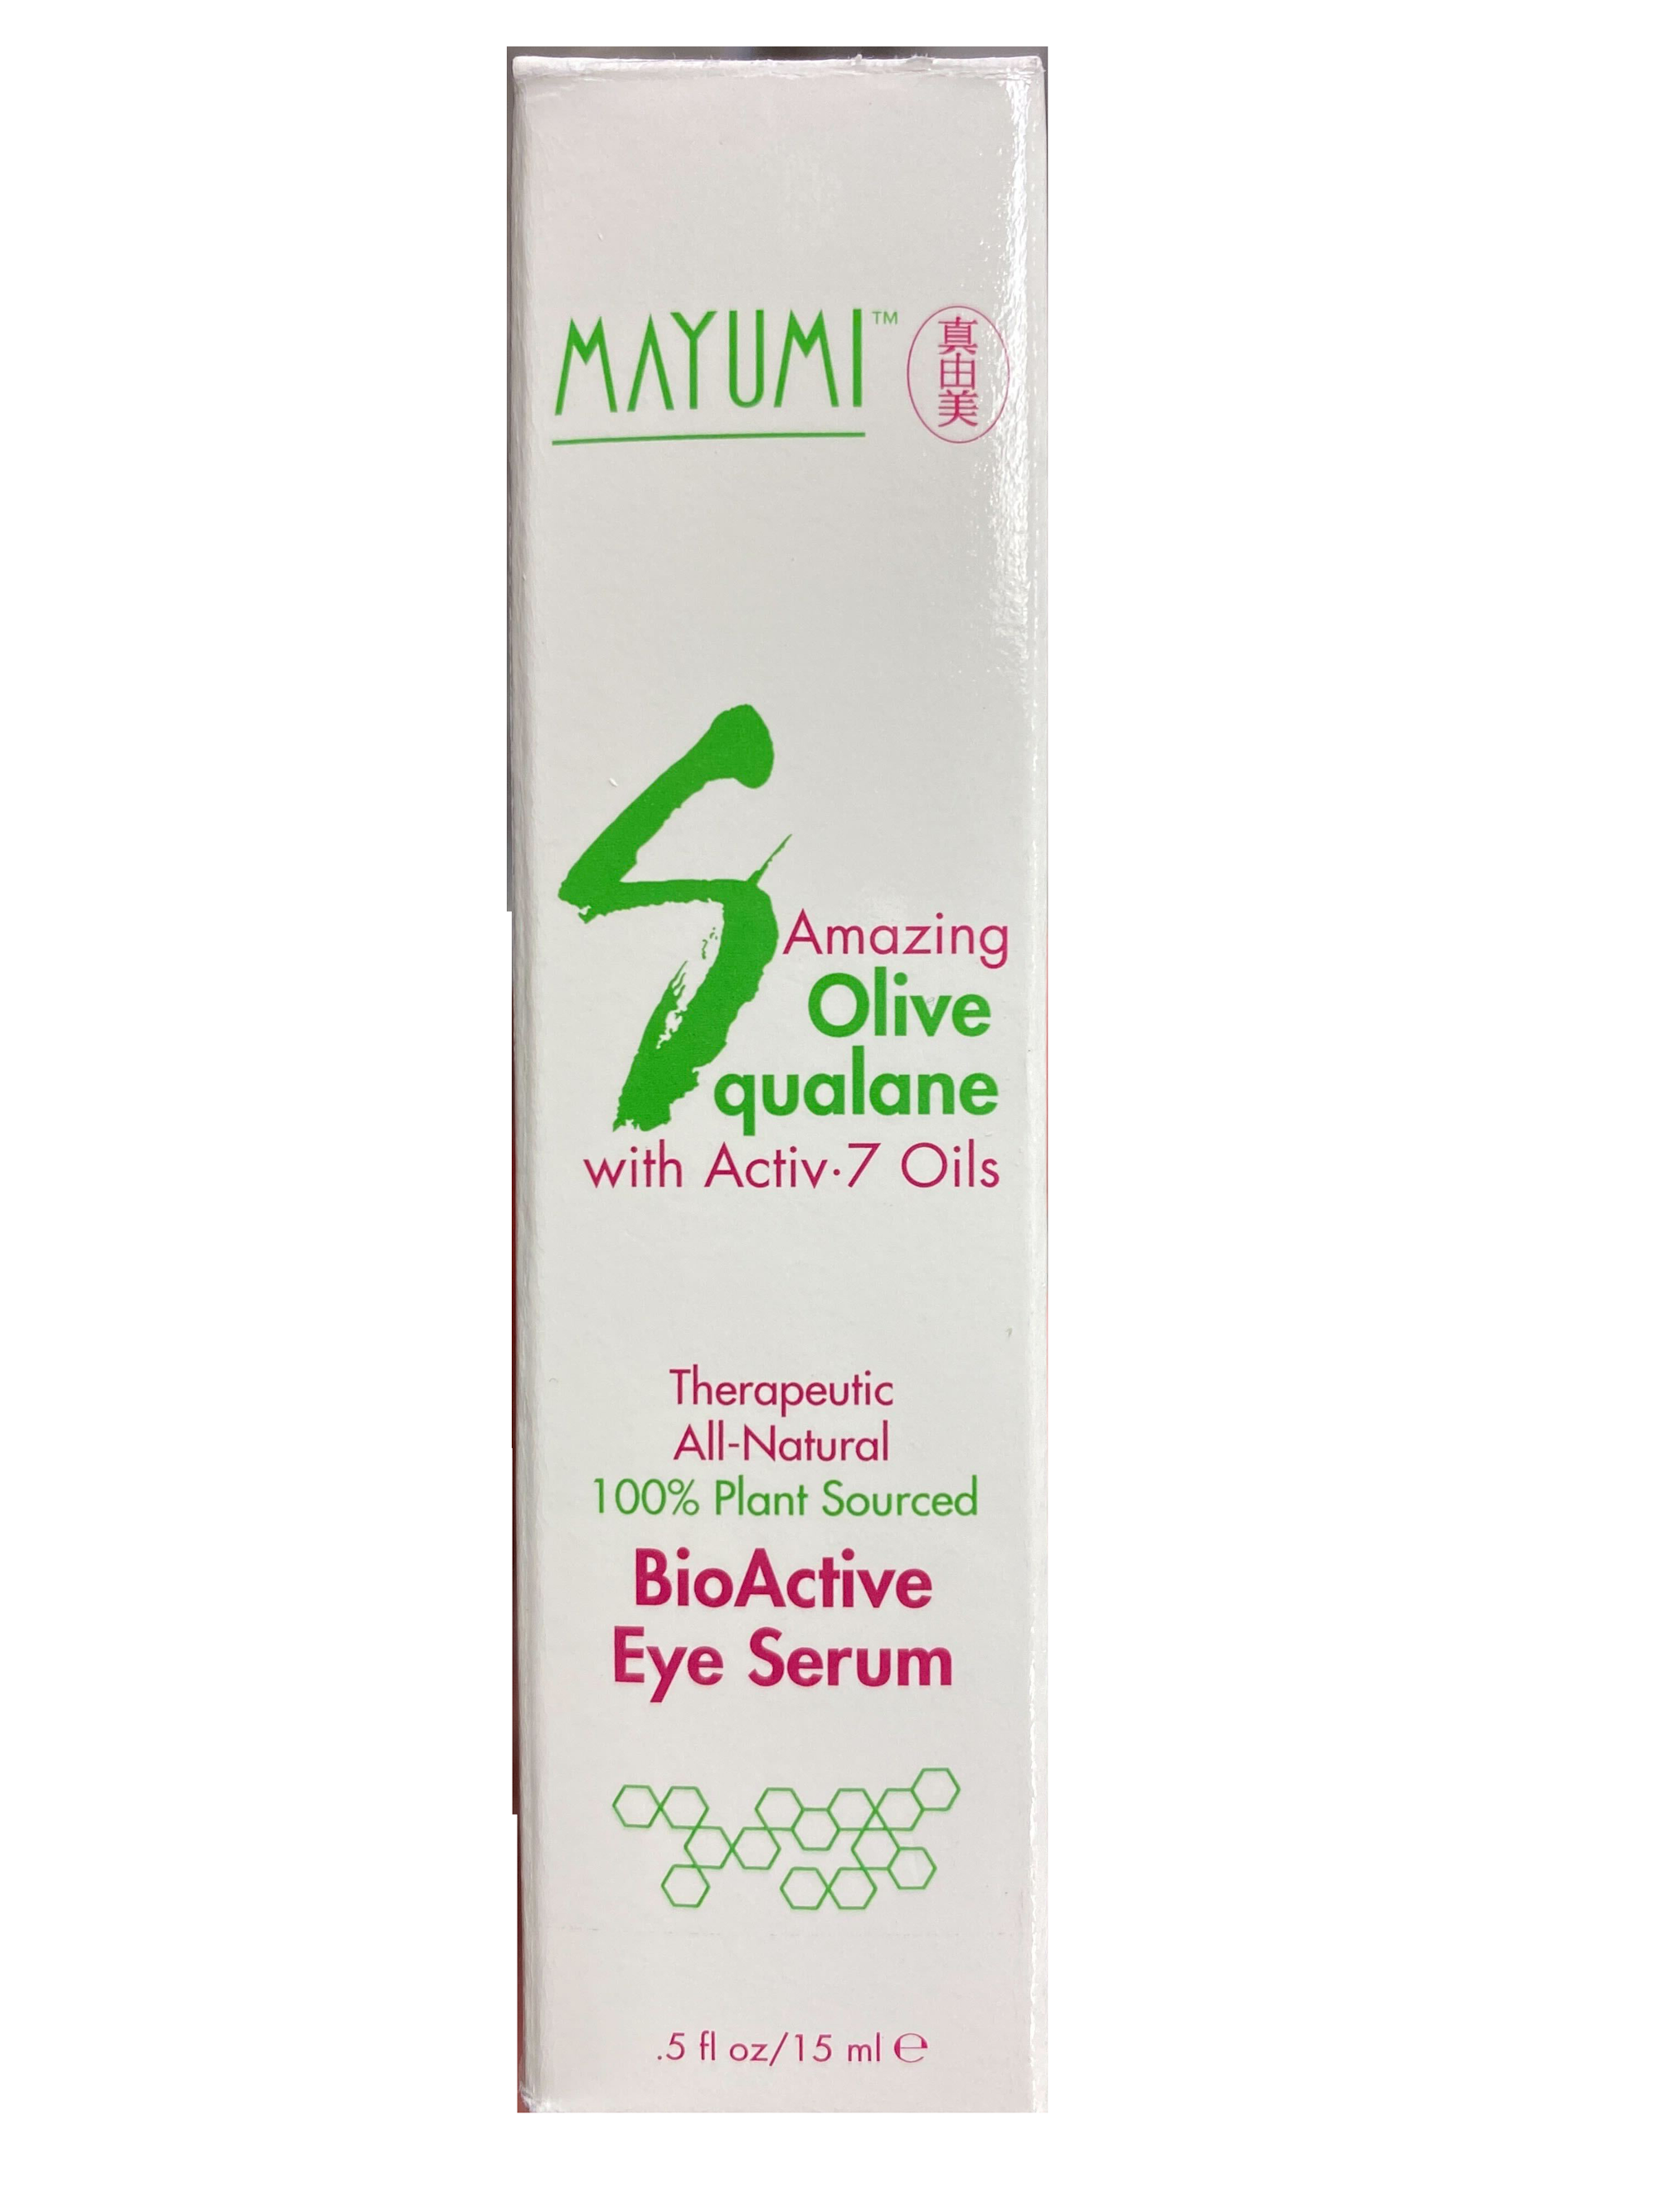 Mayumi Amazing Olive Squalane Eye Serum 15ml